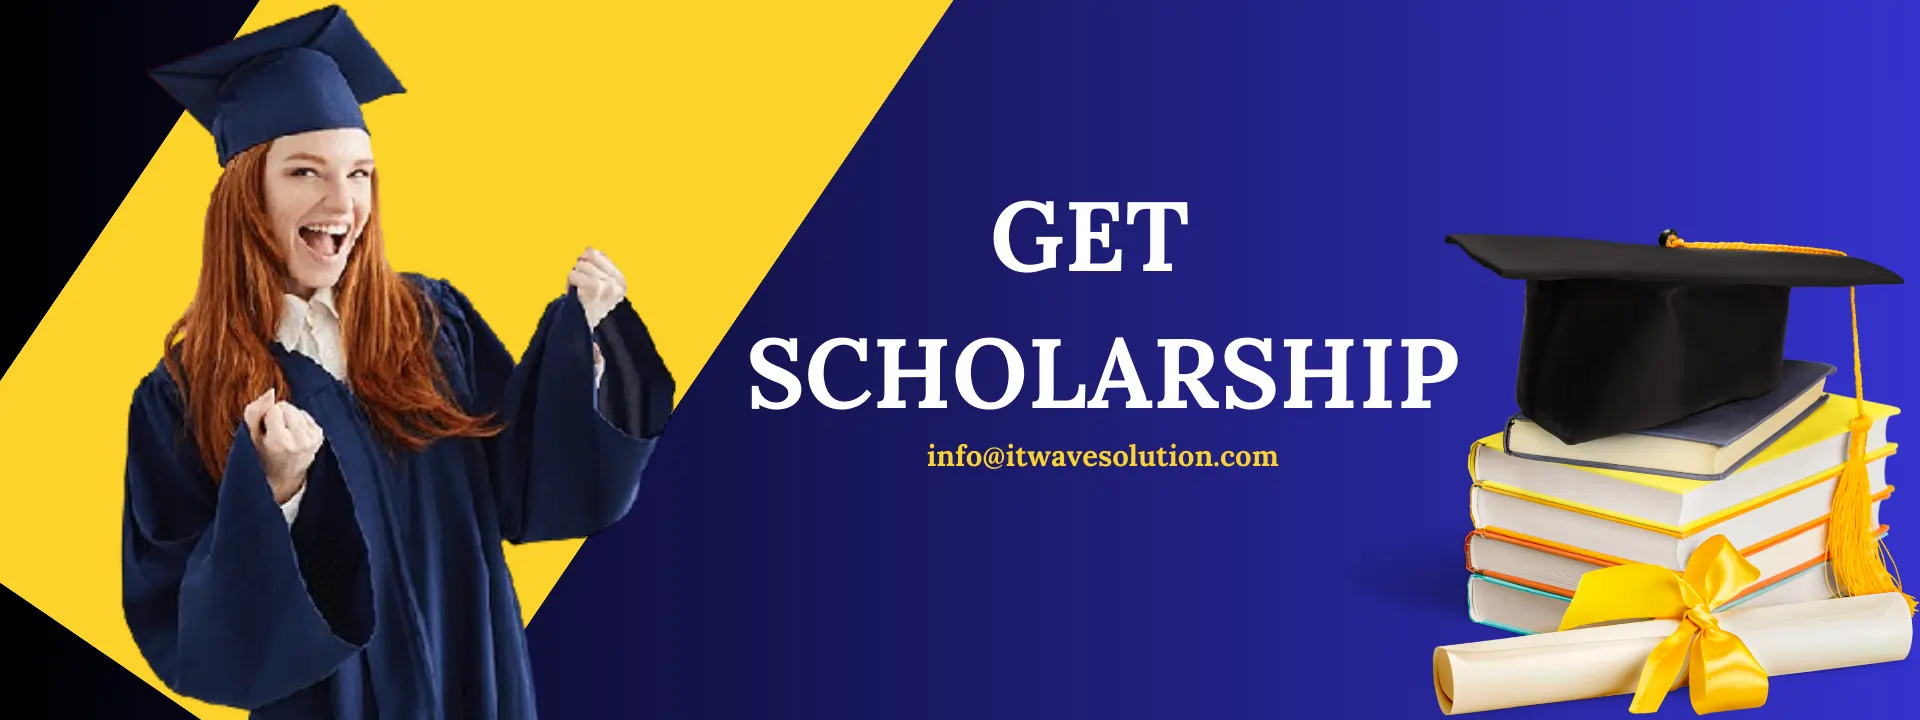 itwavesoltion-scholarship-banner